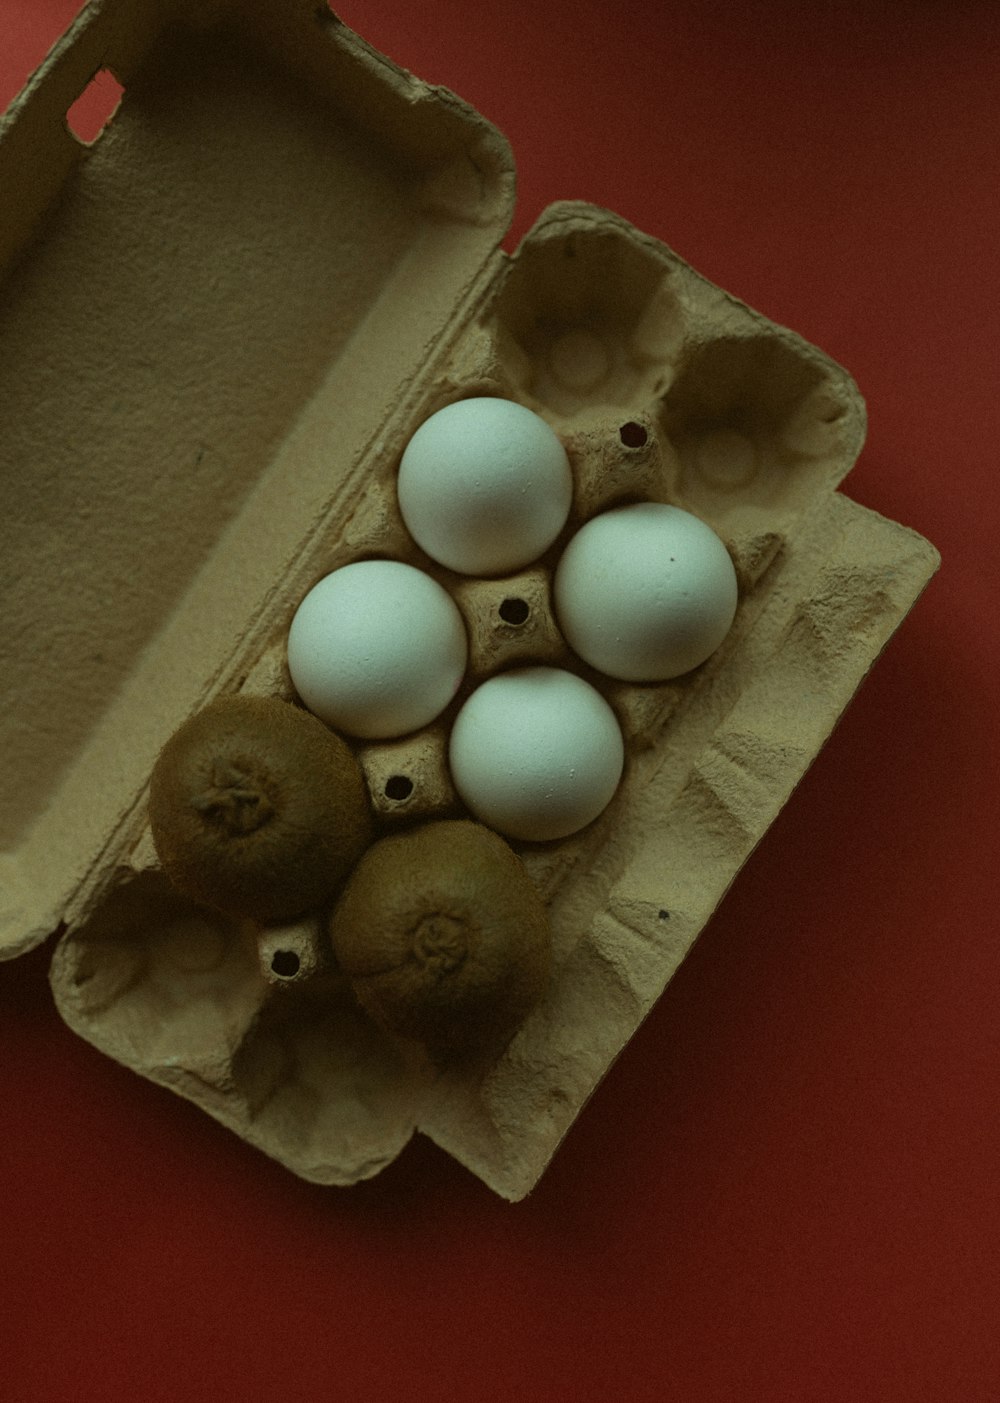 a box of eggs